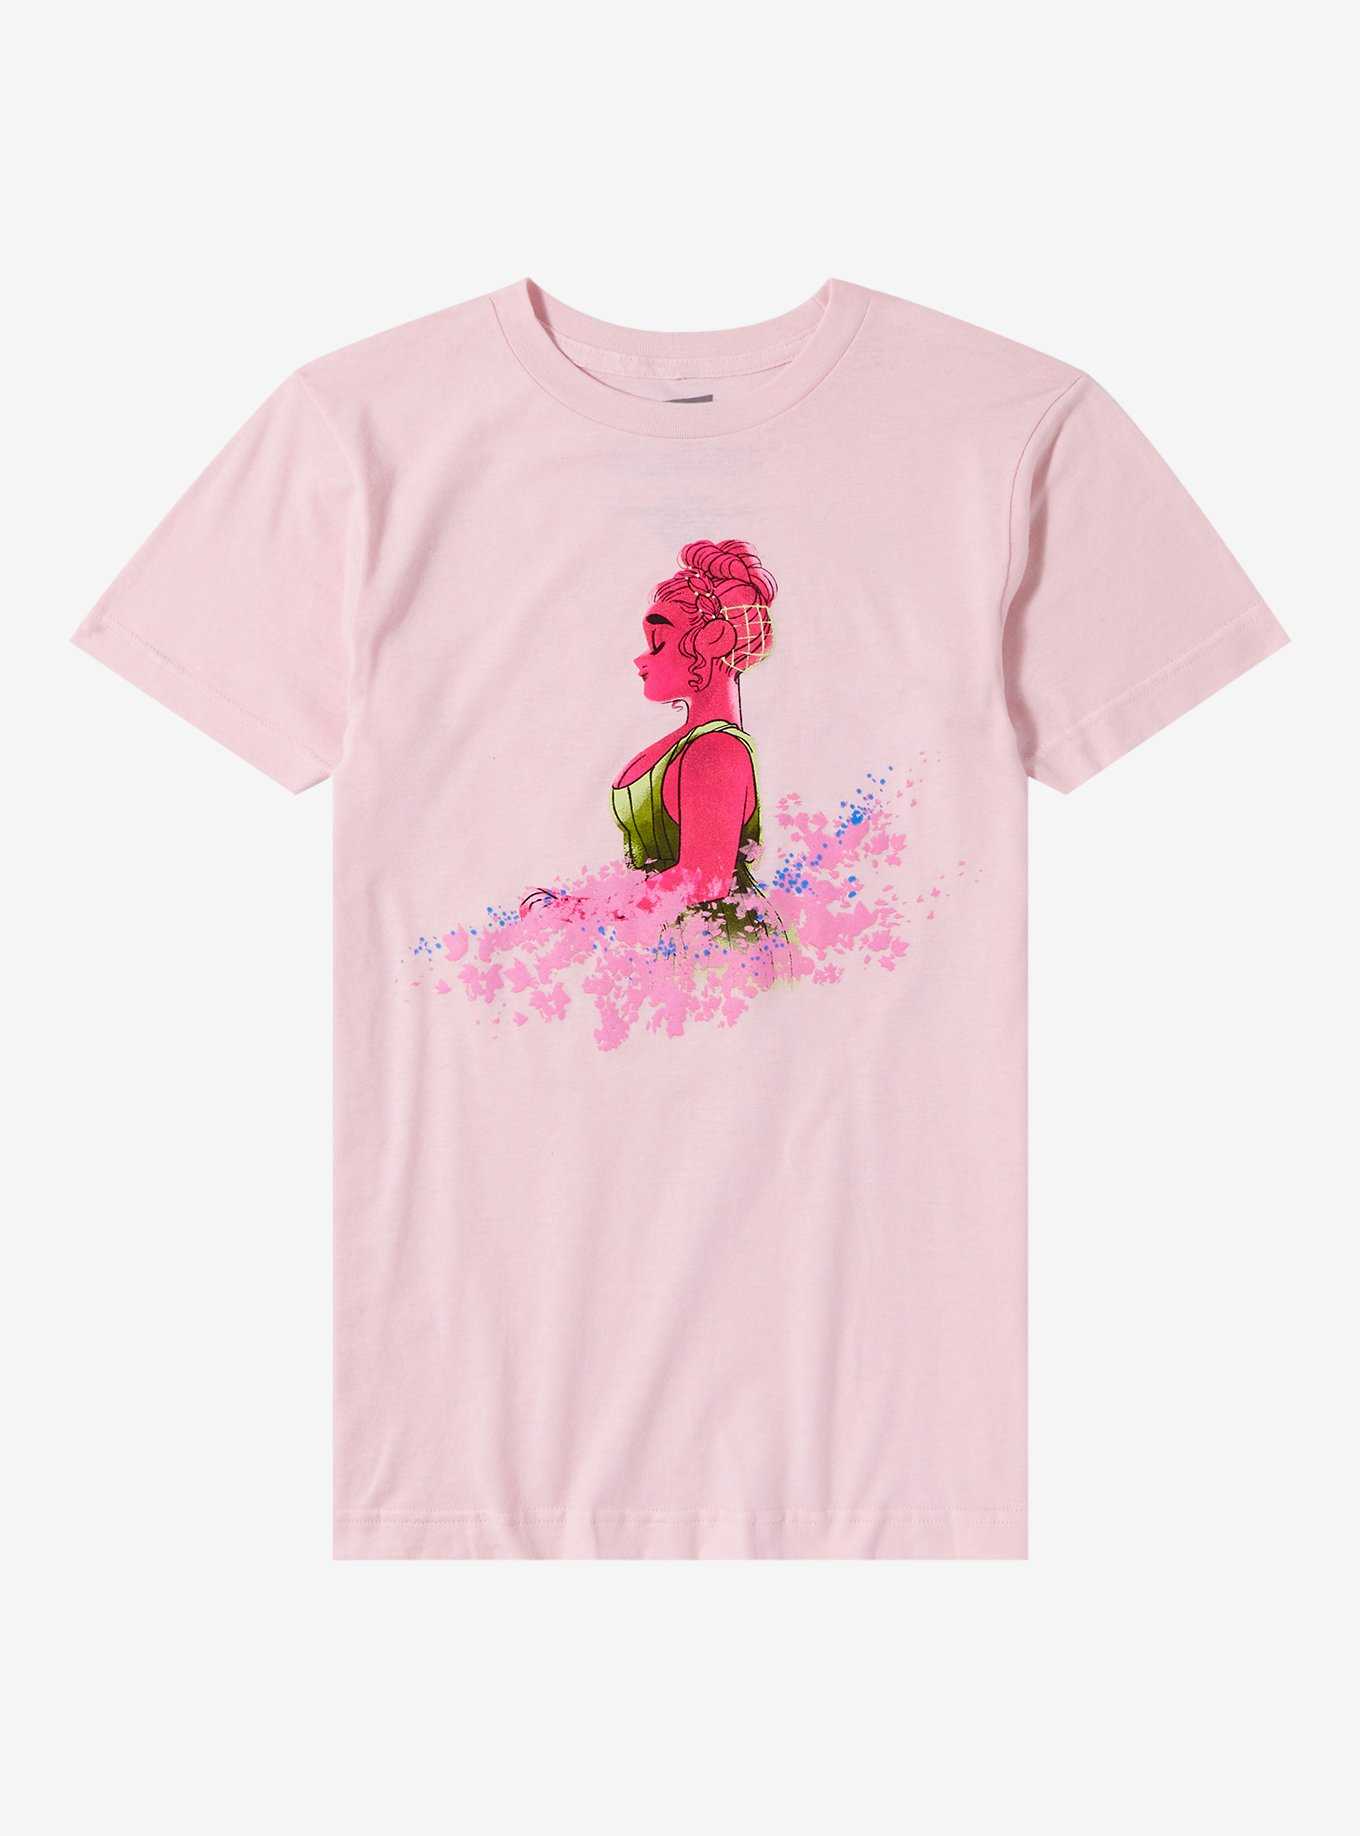 Lore Olympus Persephone Flower Boyfriend Fit Girls T-Shirt, , hi-res